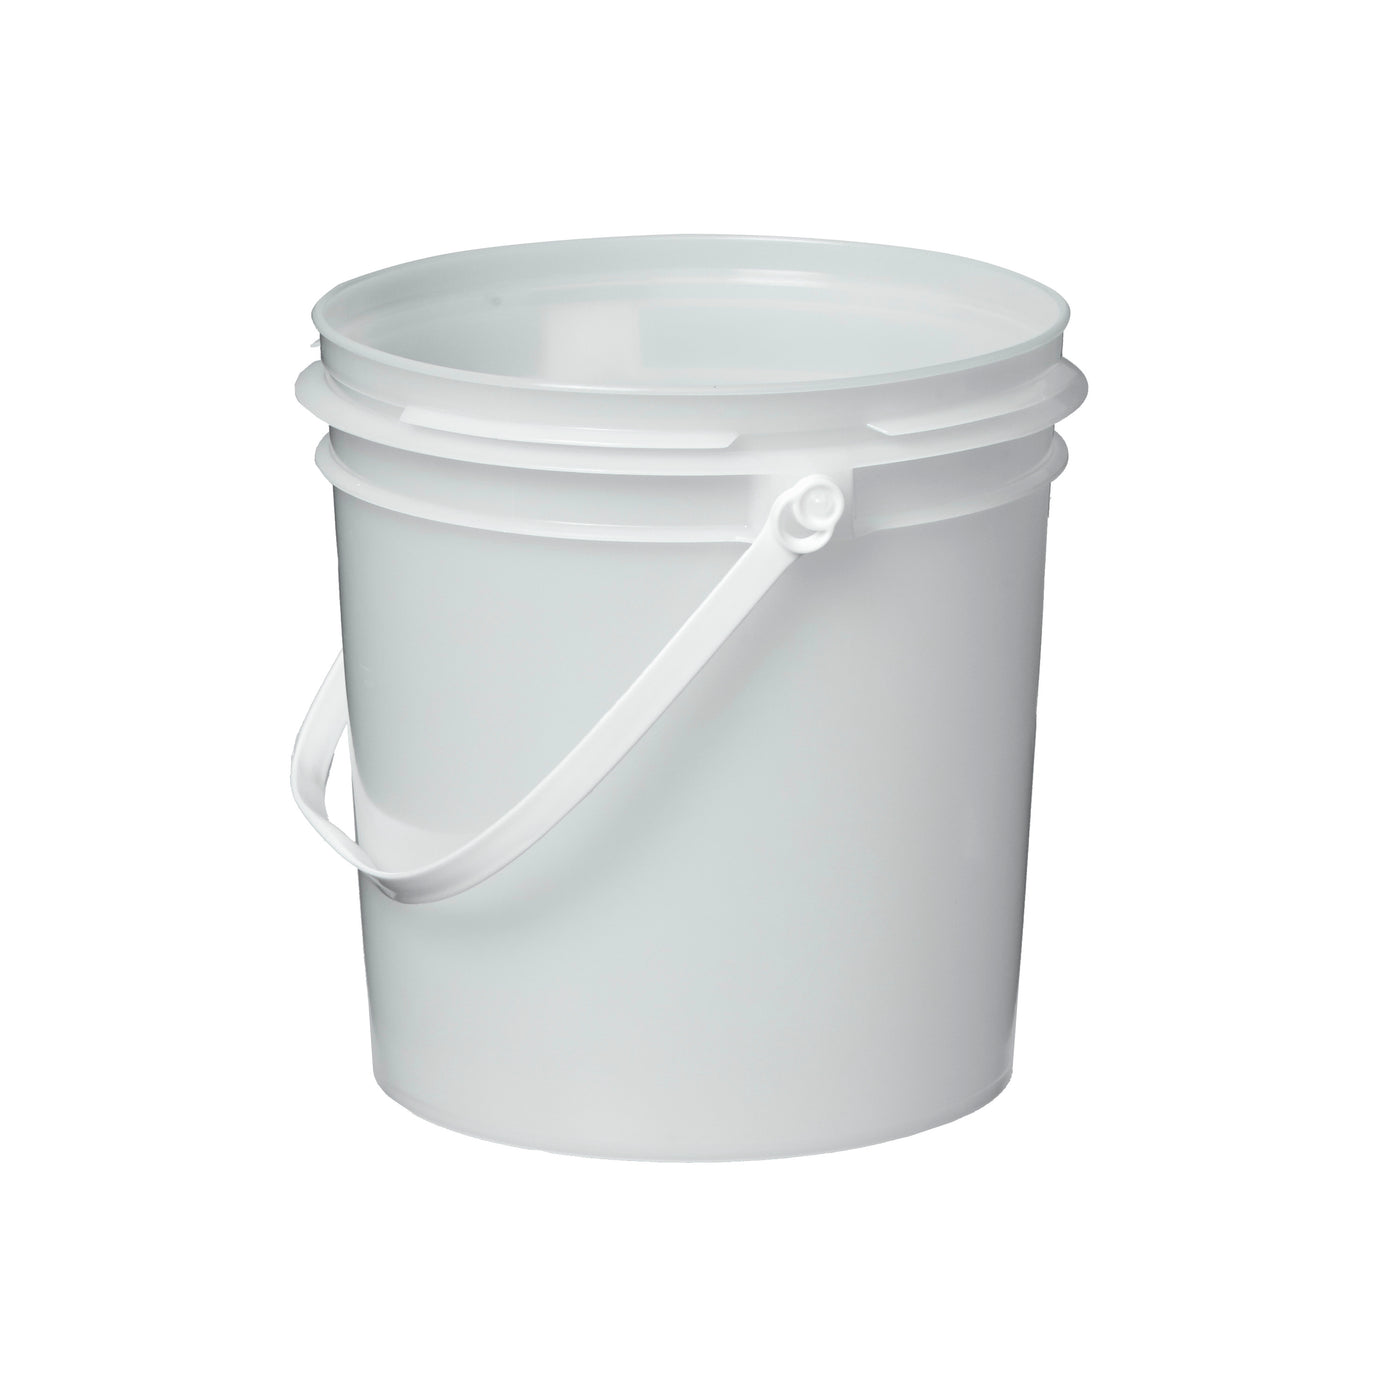 1 Gallon BPA Free Food Grade Round Plastic Bucket with White